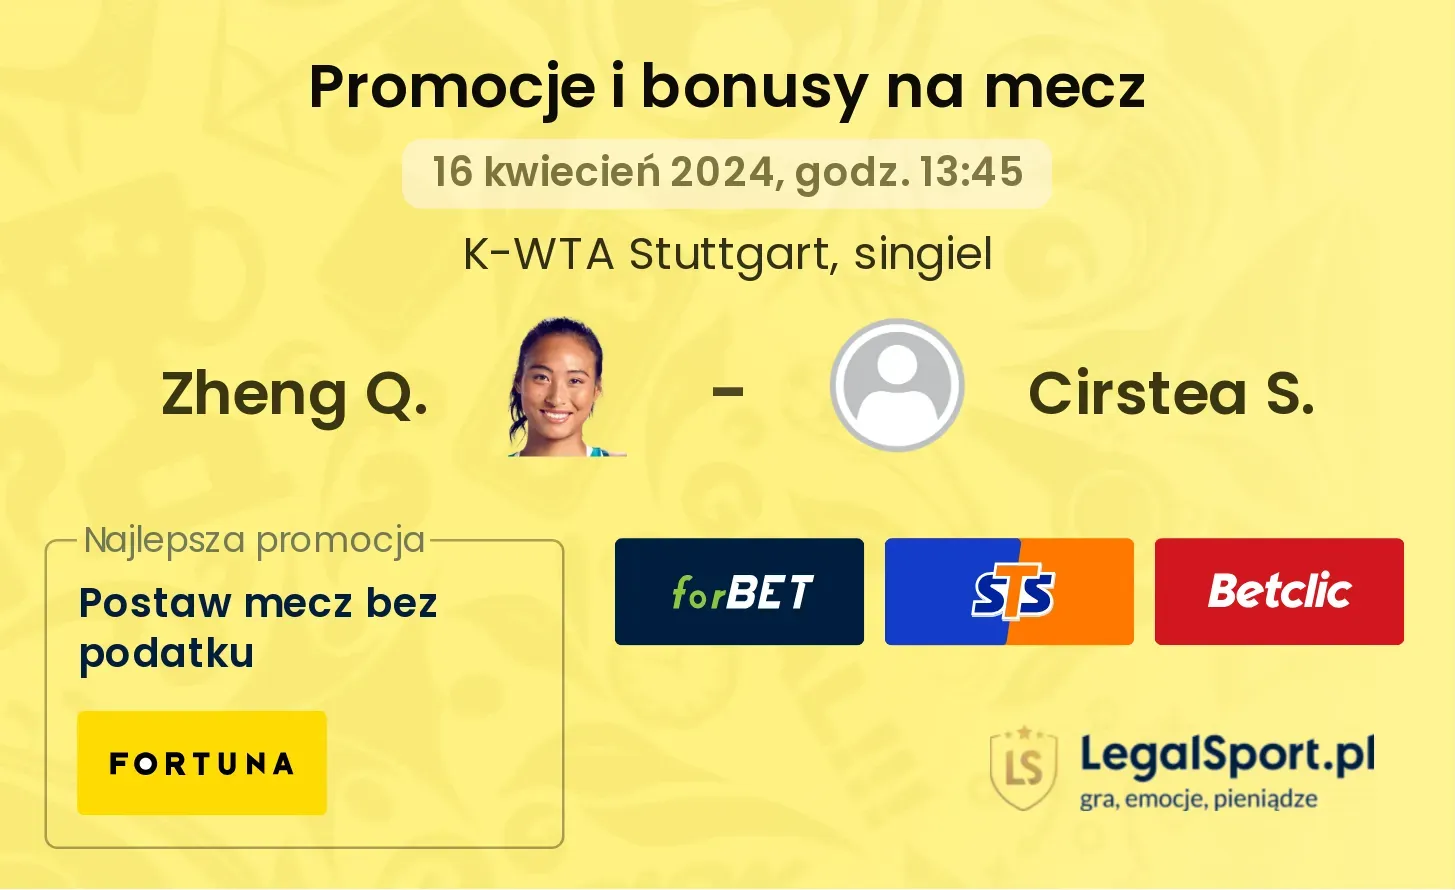 Zheng Q. - Cirstea S. promocje bonusy na mecz